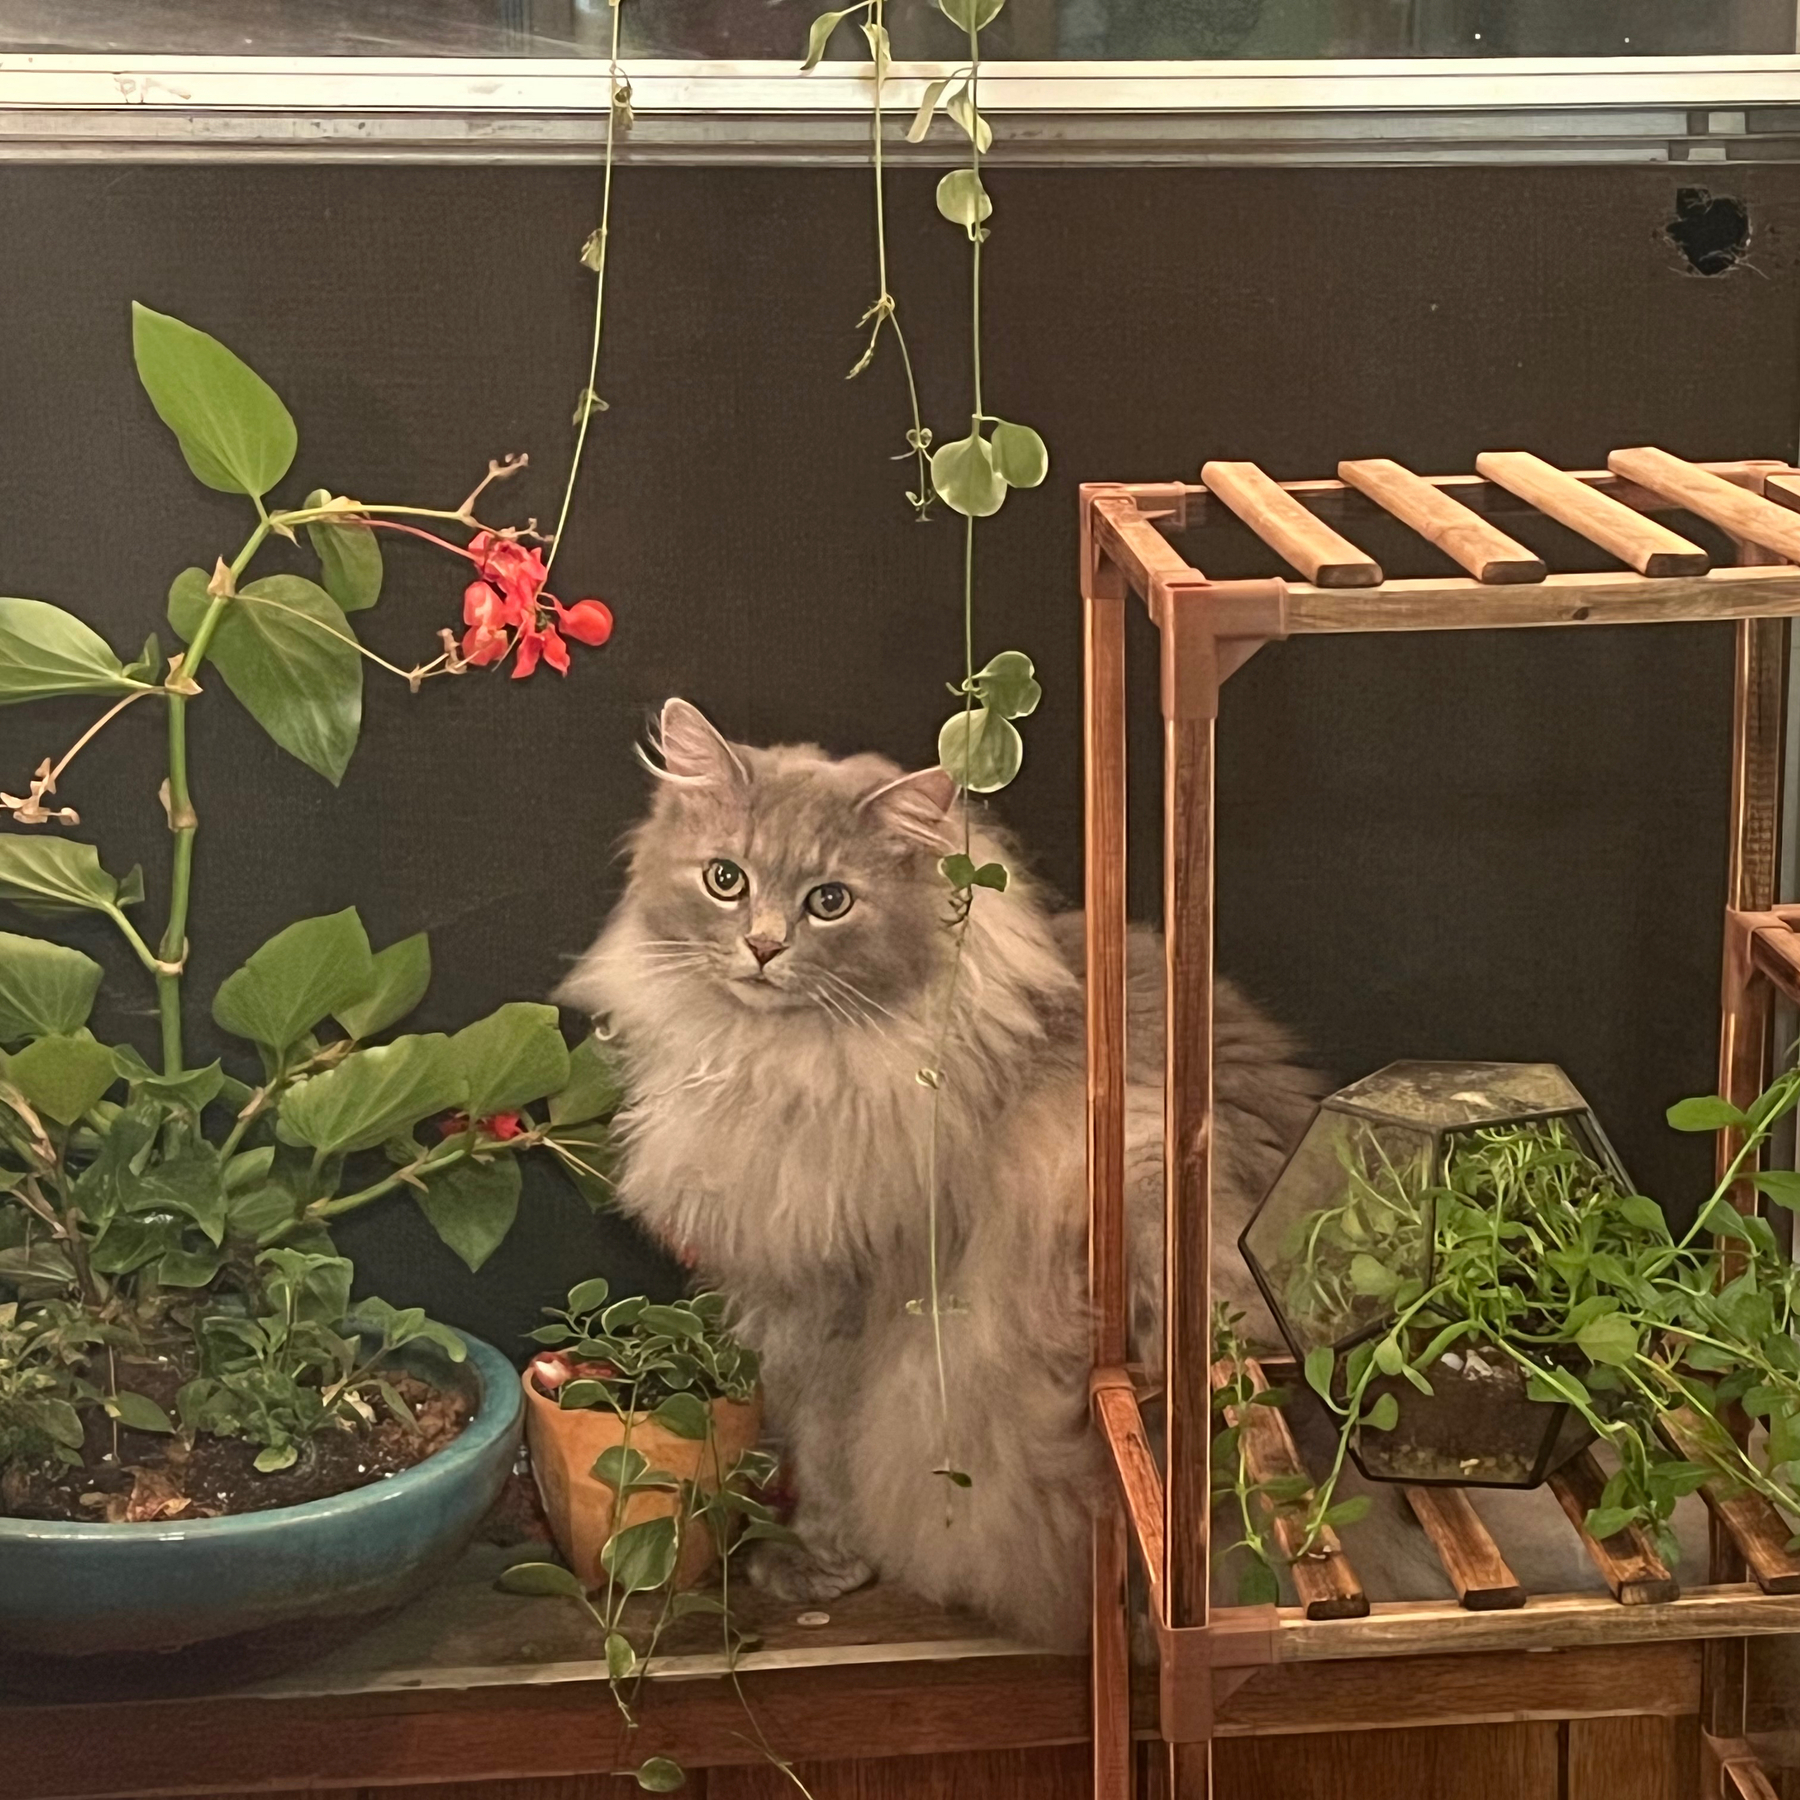 A grey cat sitting amongst houseplants.